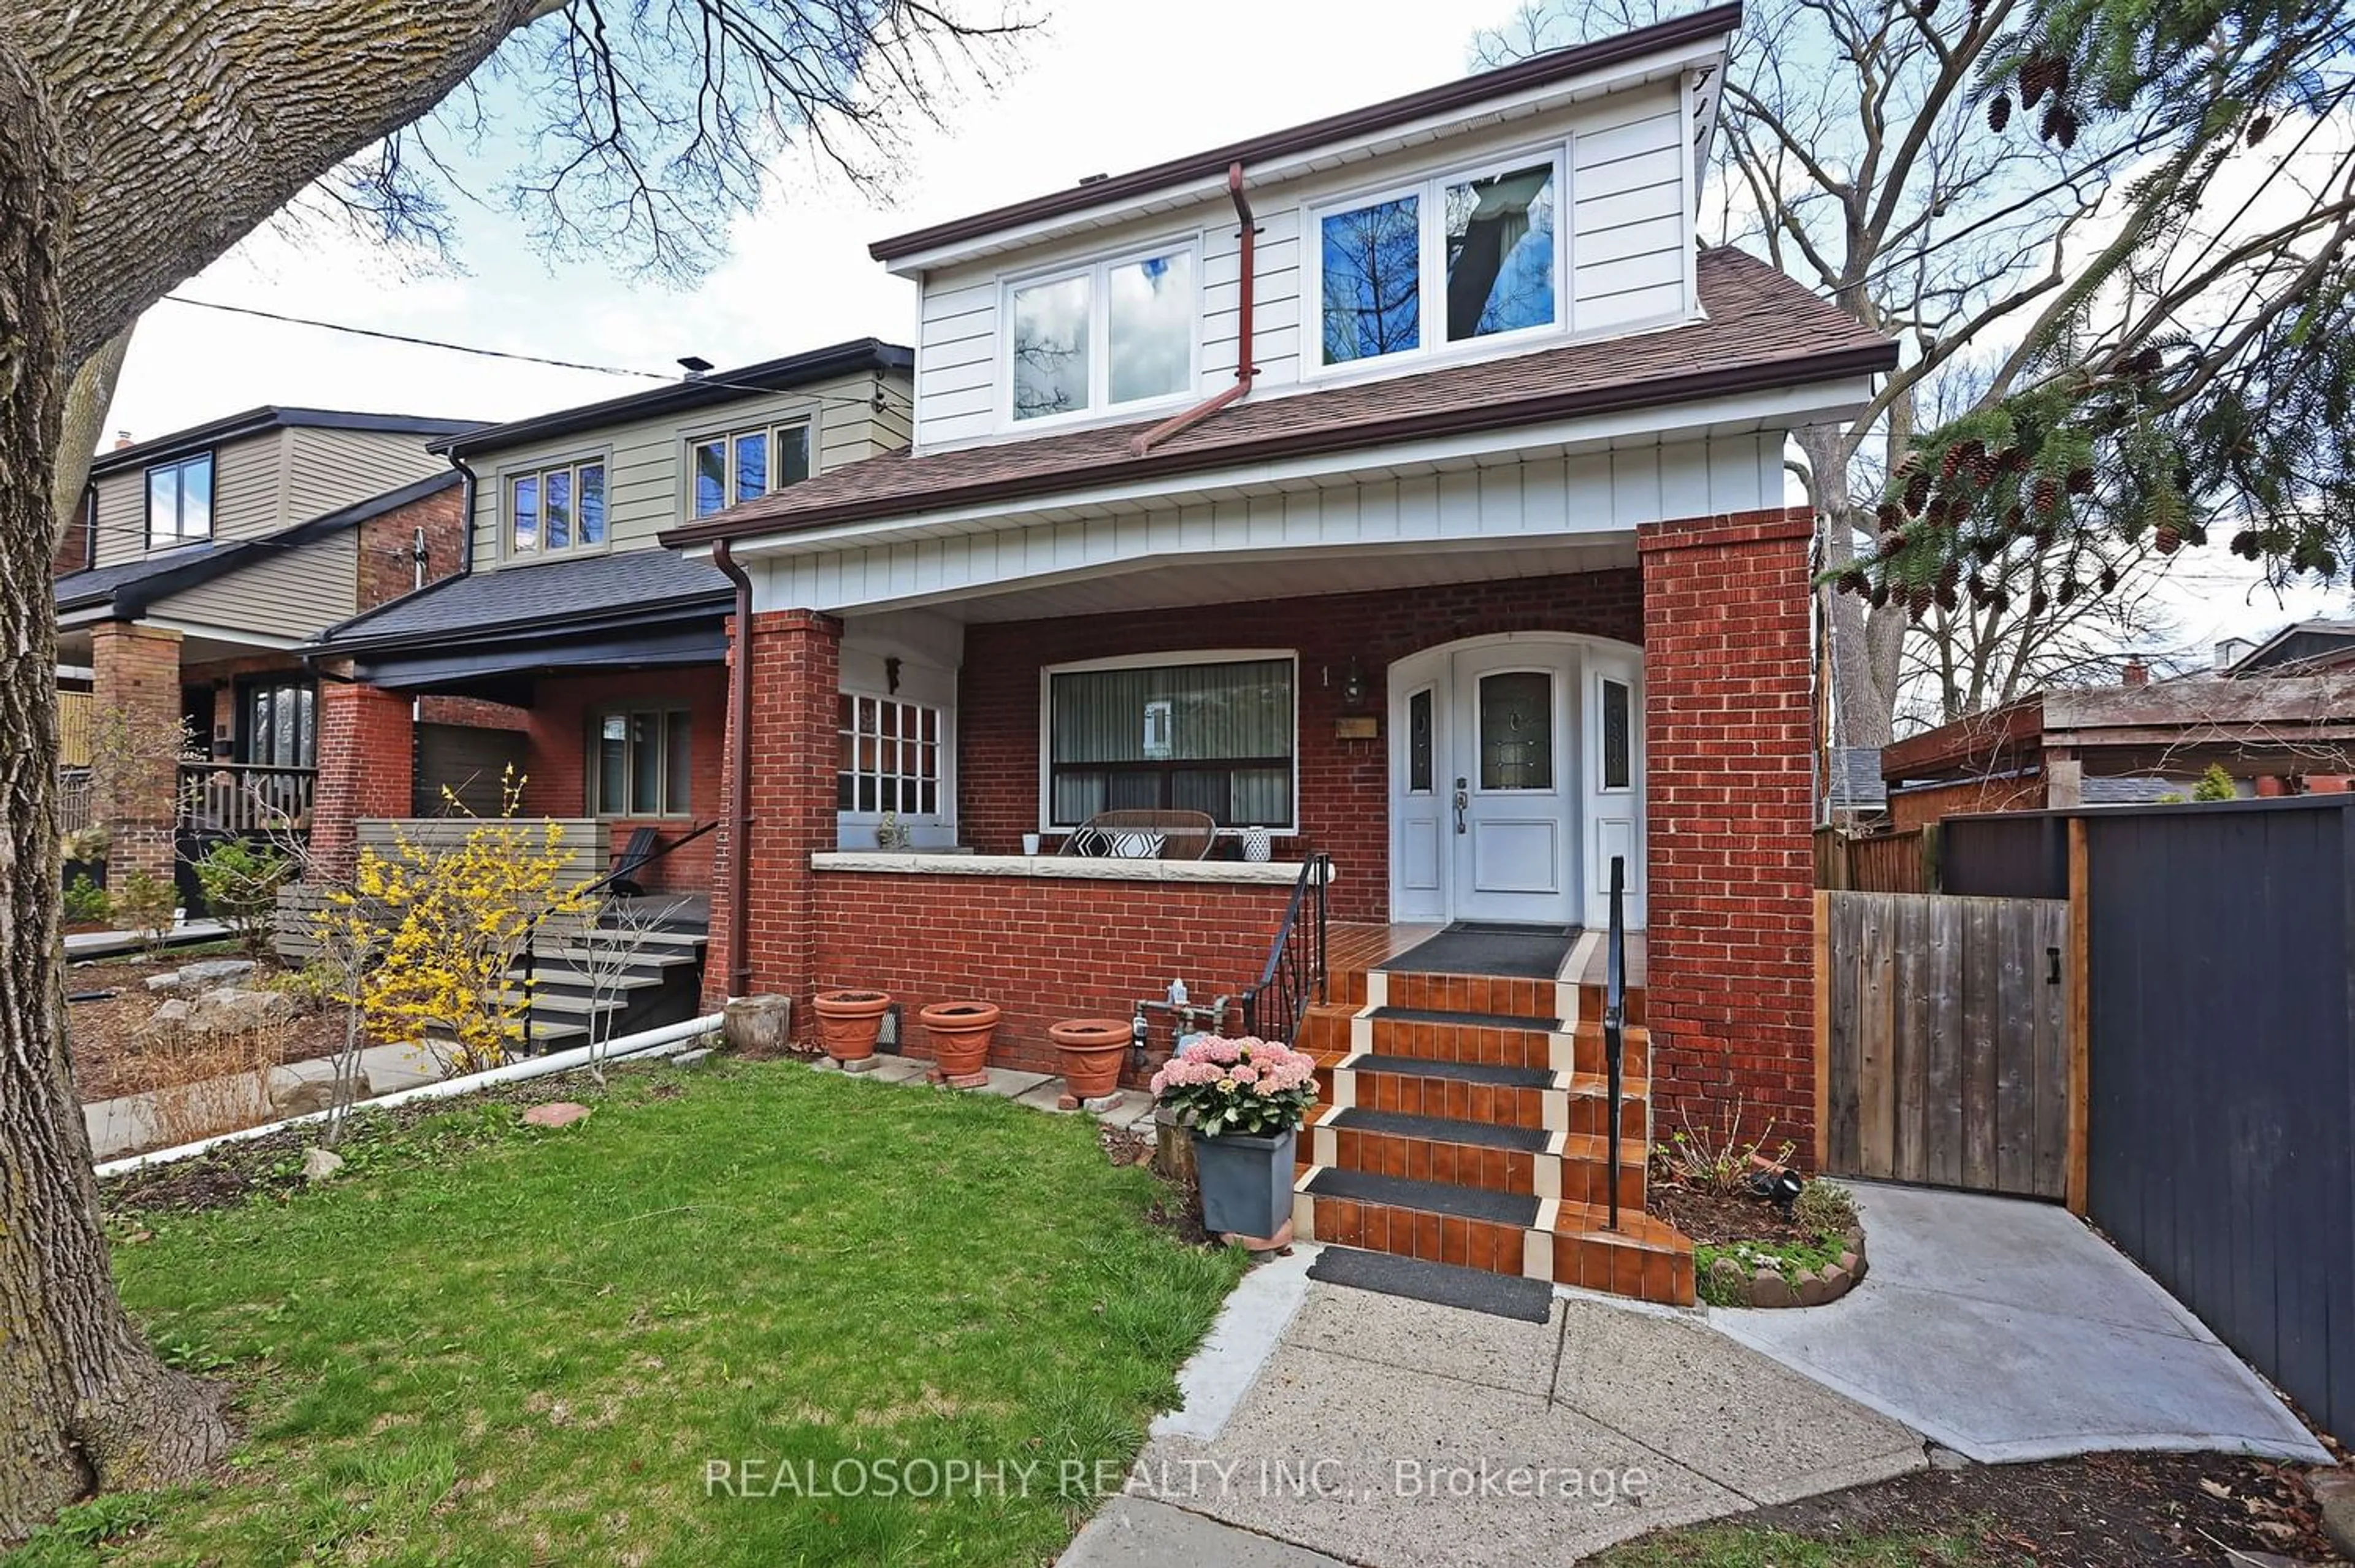 Home with brick exterior material for 1 Slade Ave, Toronto Ontario M6G 2Z9